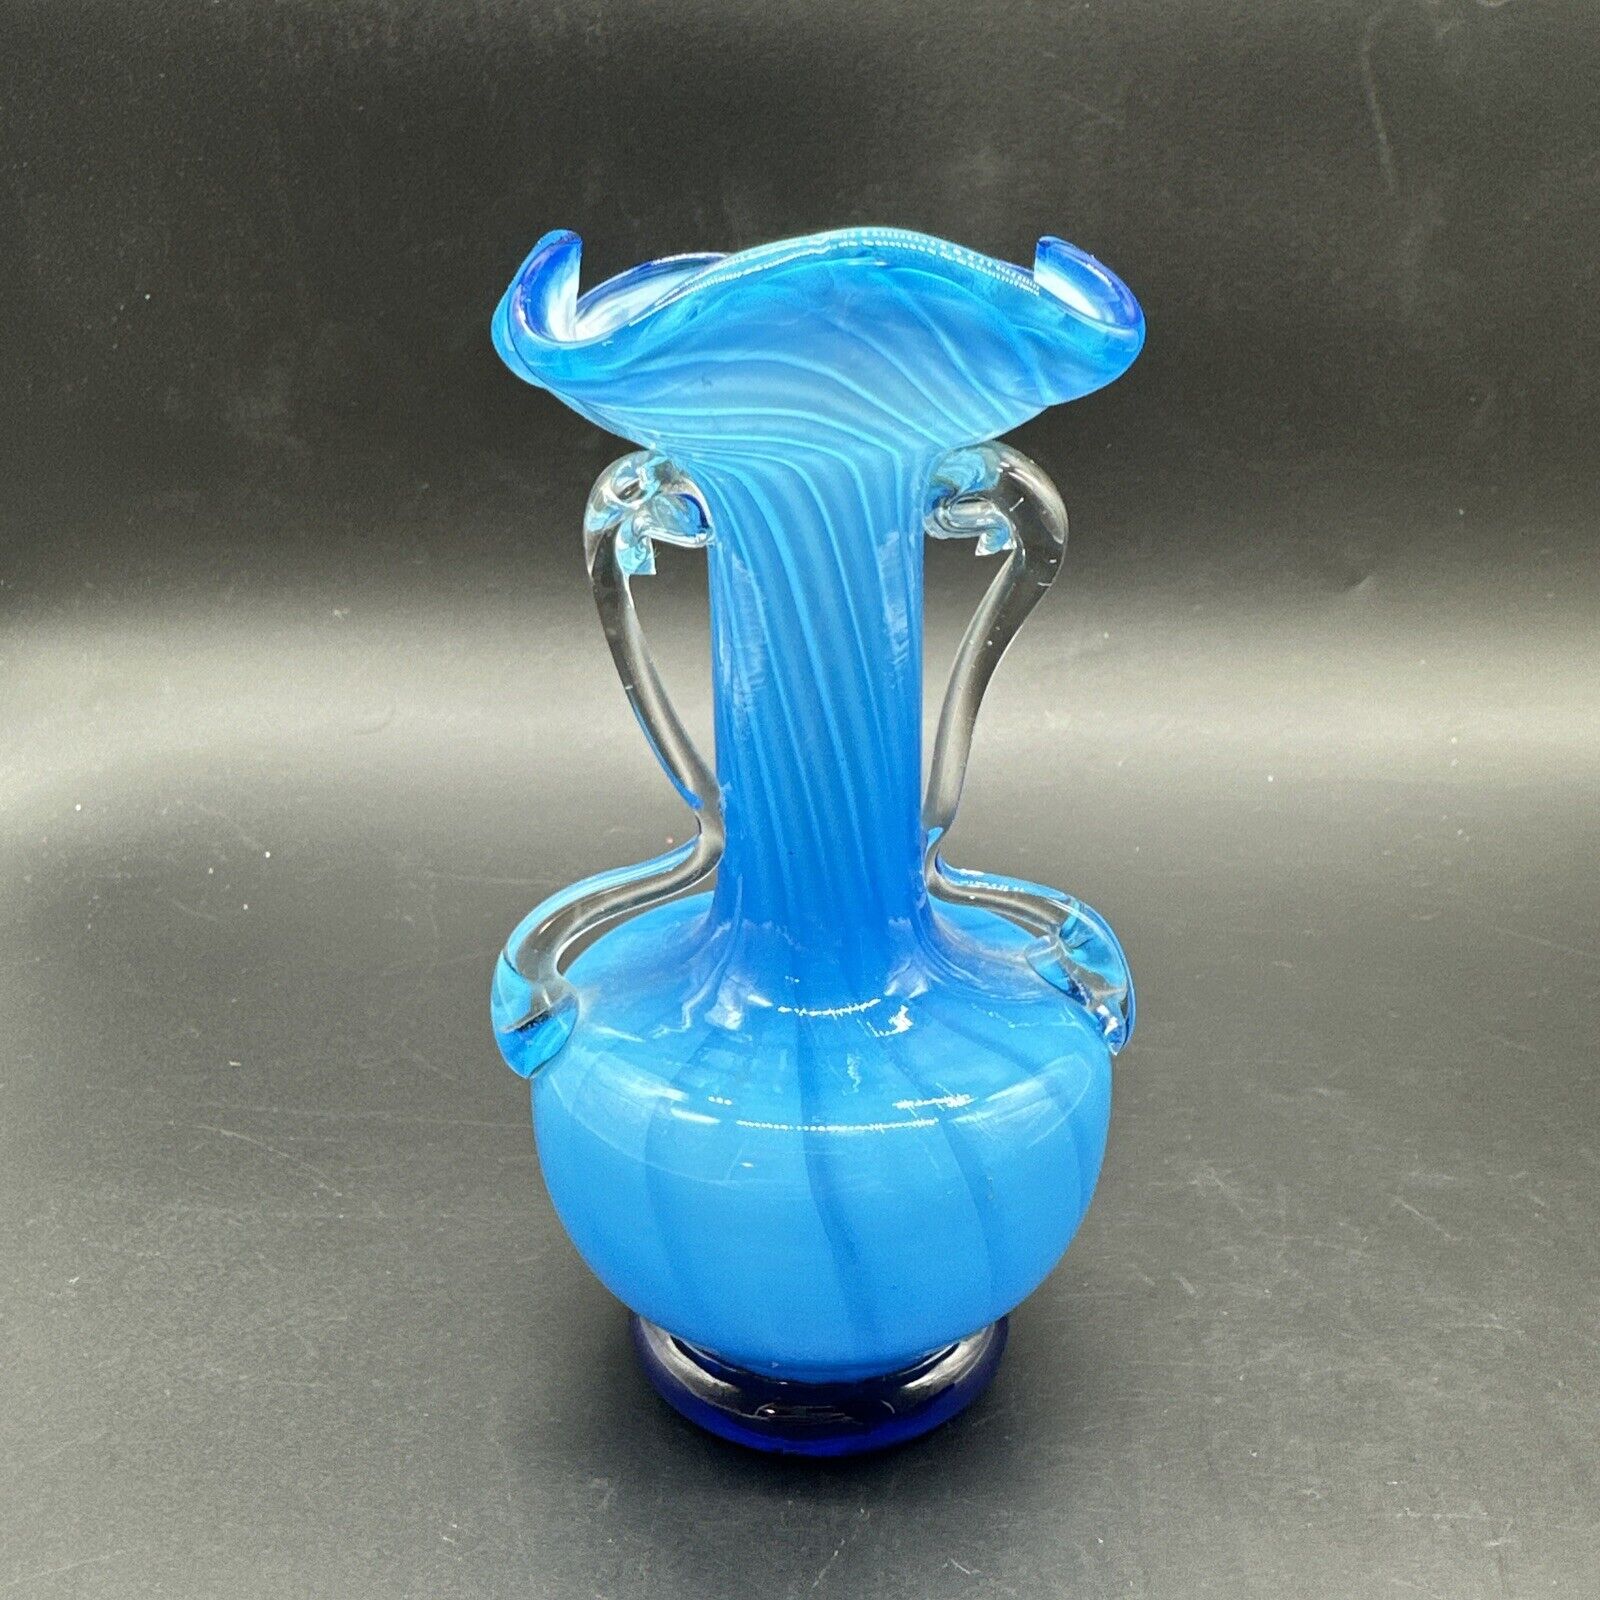 Light And Dark Blue Art Glass Ruffled Top Vase White Inside /Glass With Handles